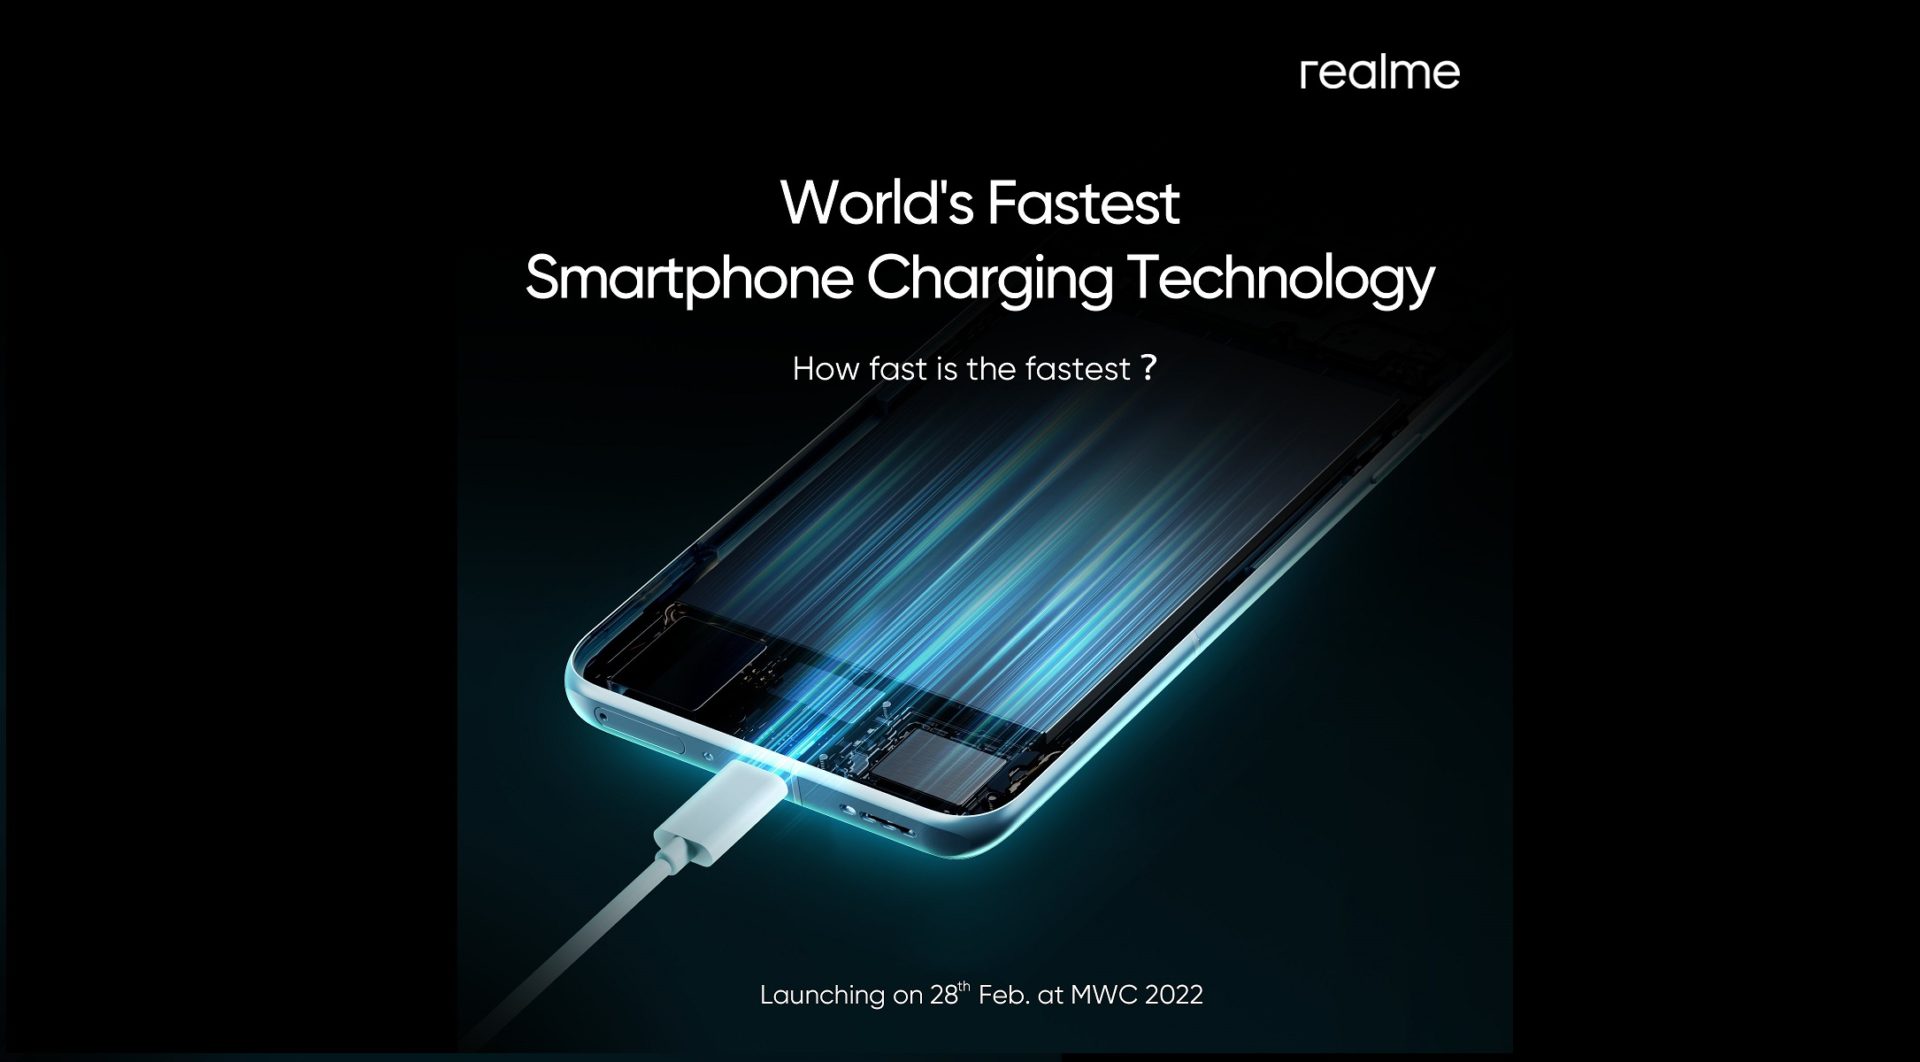 Realme เตรียมเปิดตัว เทคโนโลยีชาร์จสมาร์ตโฟนที่ ‘เร็วที่สุดในโลก’ 28 ก.พ. นี้!